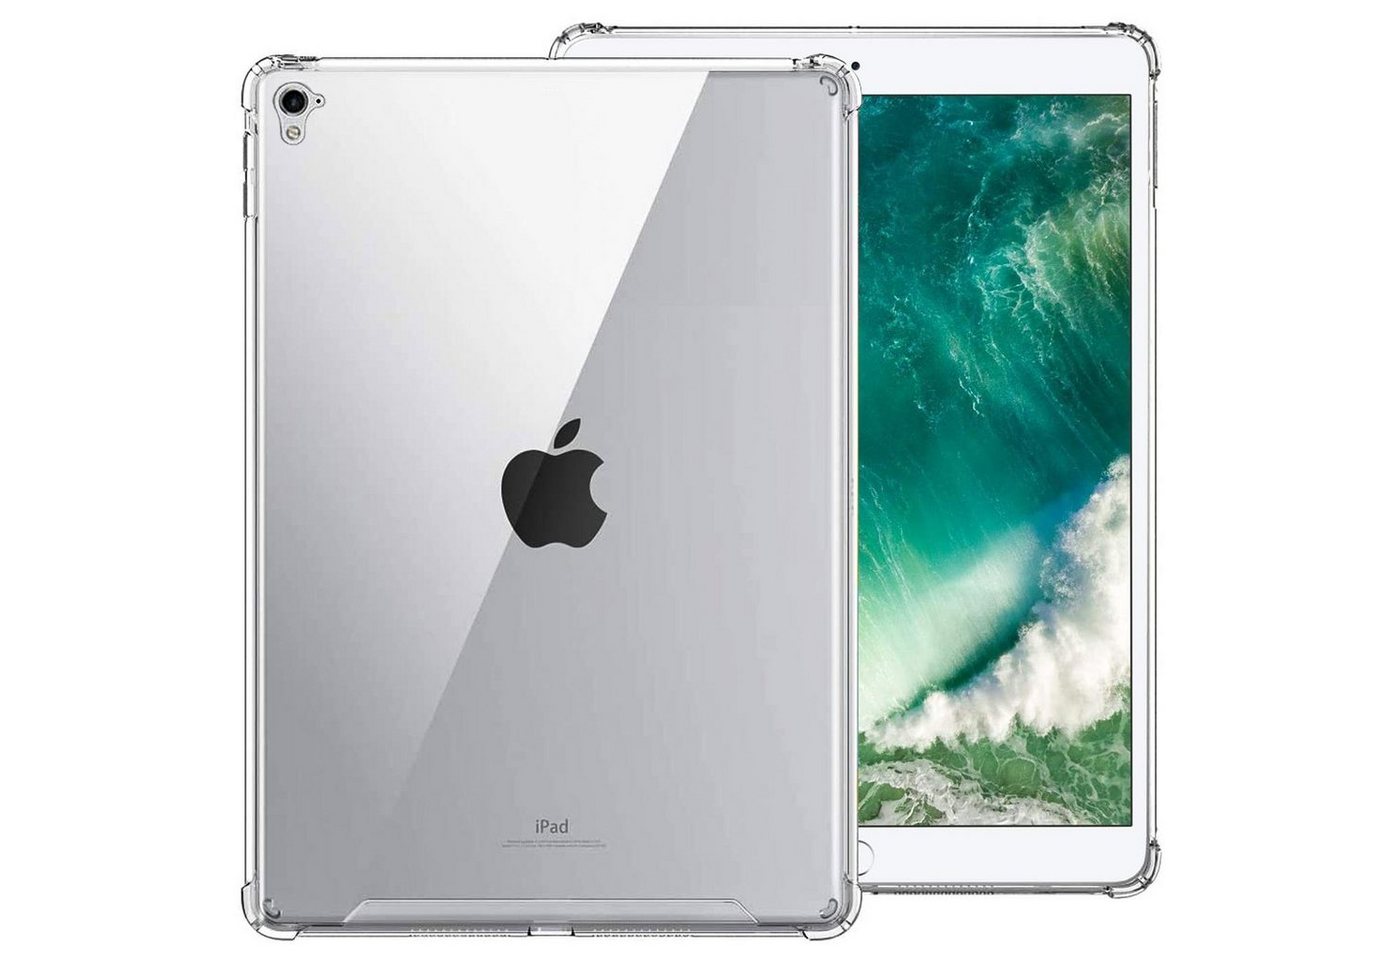 CoolGadget Tablet-Hülle Ultraleichte Schutzhülle für iPad Pro 9.7 24,6 cm (9,7 Zoll), Kantenschutz robustes Slim Case für Apple iPad Pro 9.7 Tablet Hülle von CoolGadget